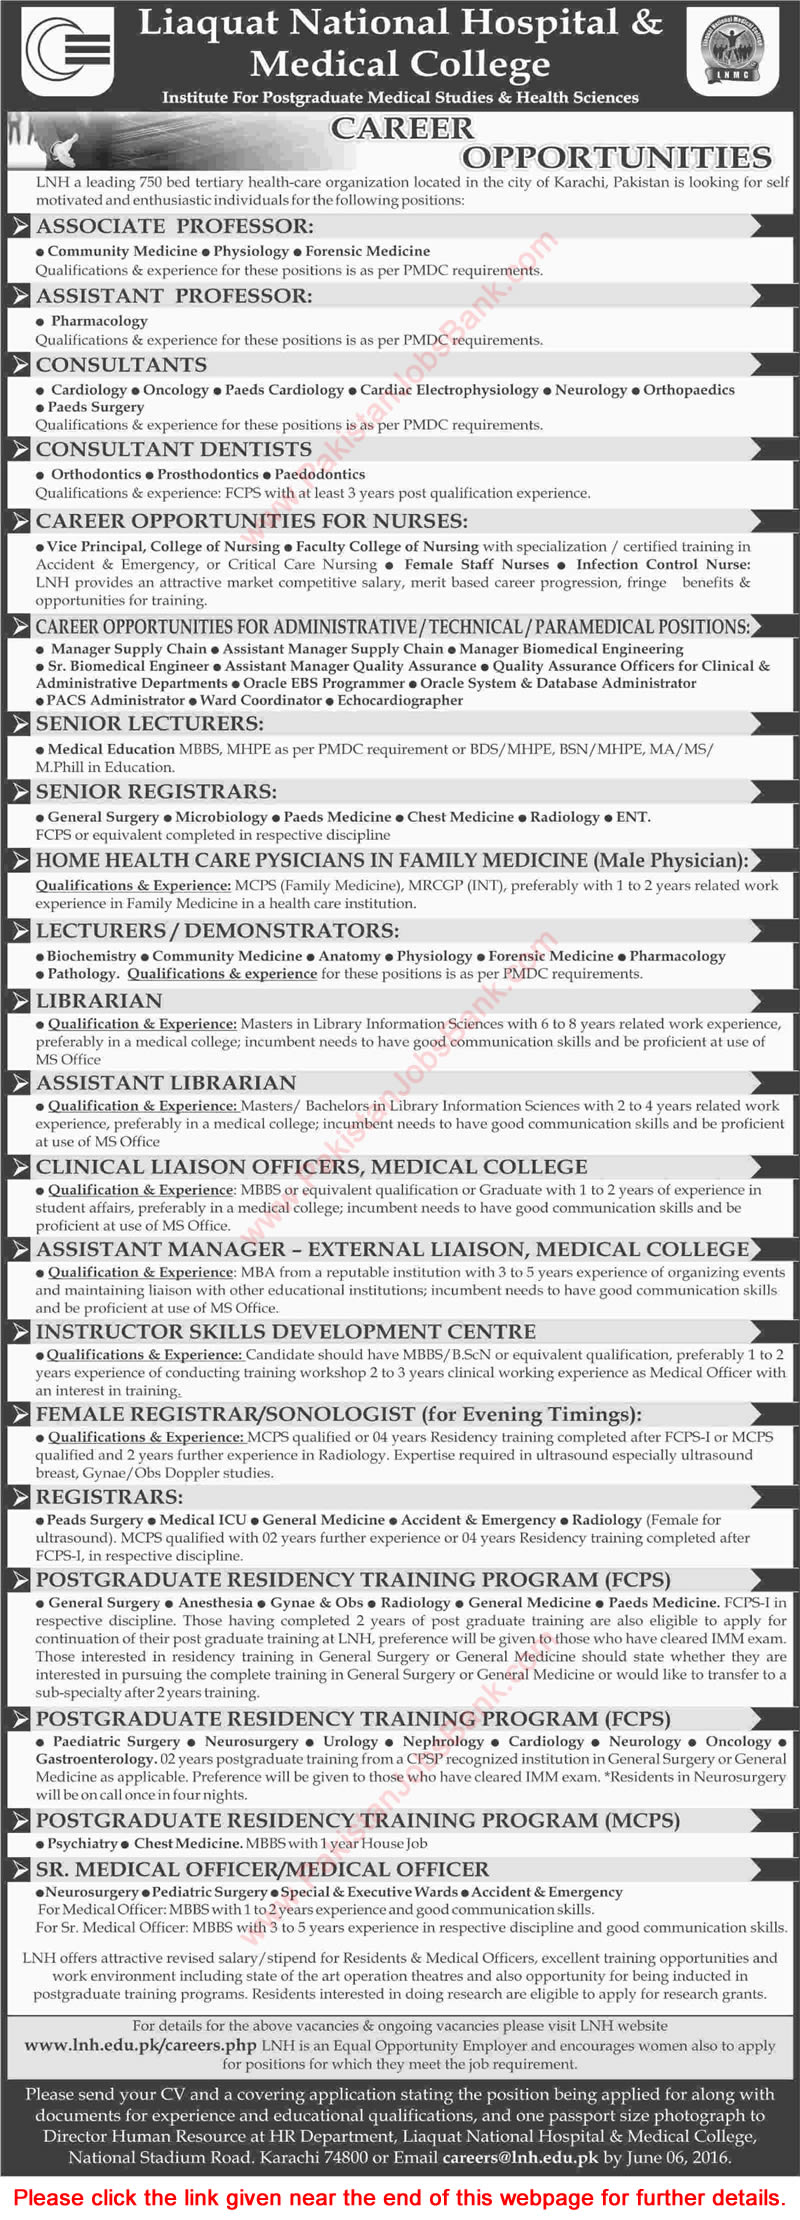 Liaquat National Hospital Karachi Jobs May 2016 June LNMC Medical College Latest / New